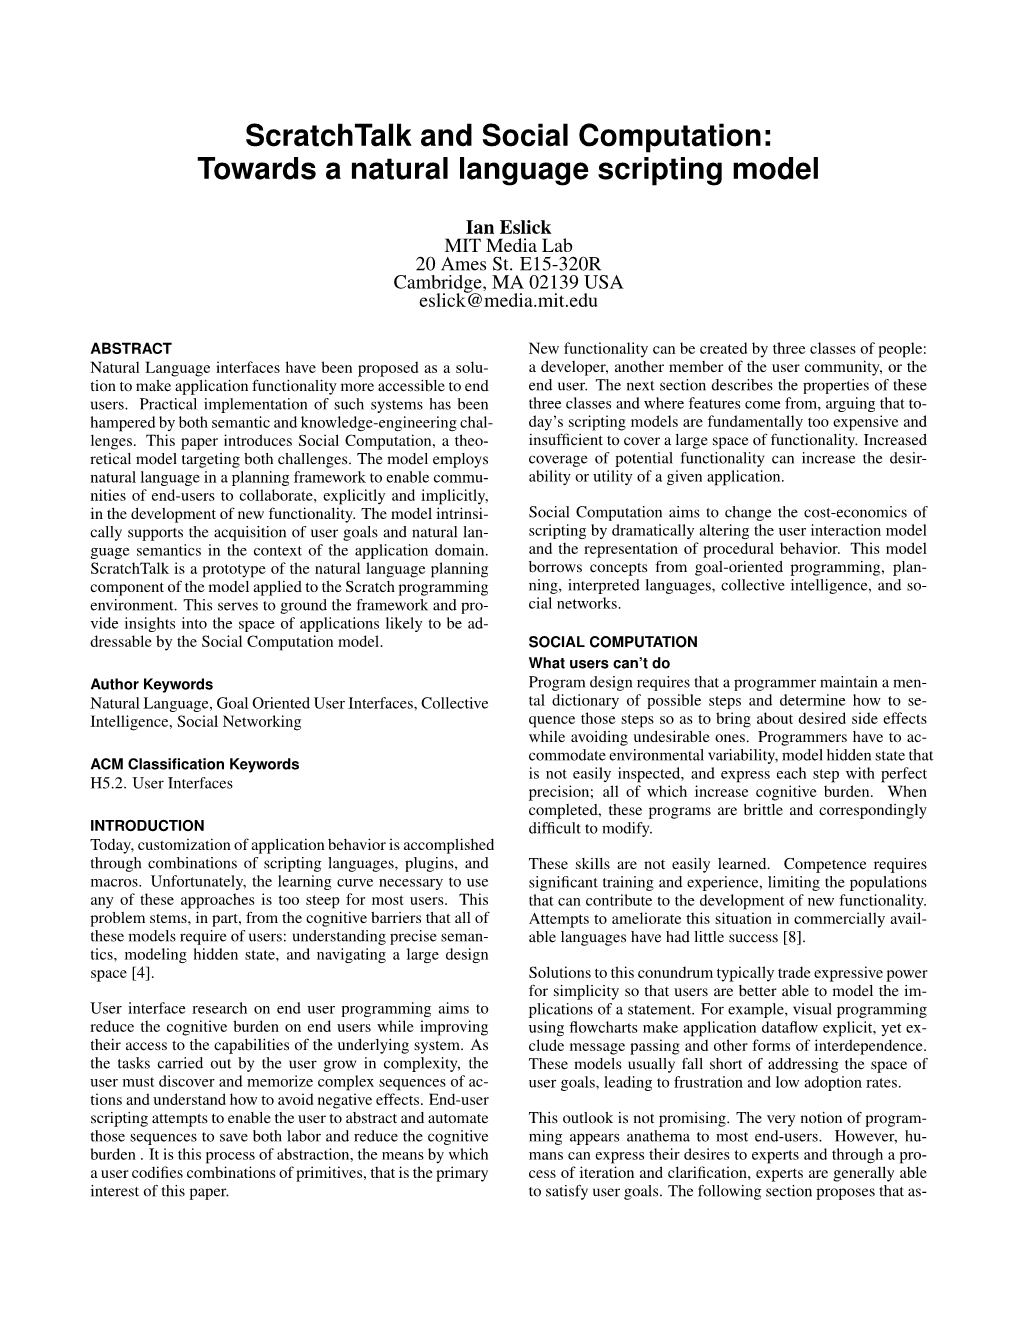 Scratchtalk and Social Computation: Towards a Natural Language Scripting Model